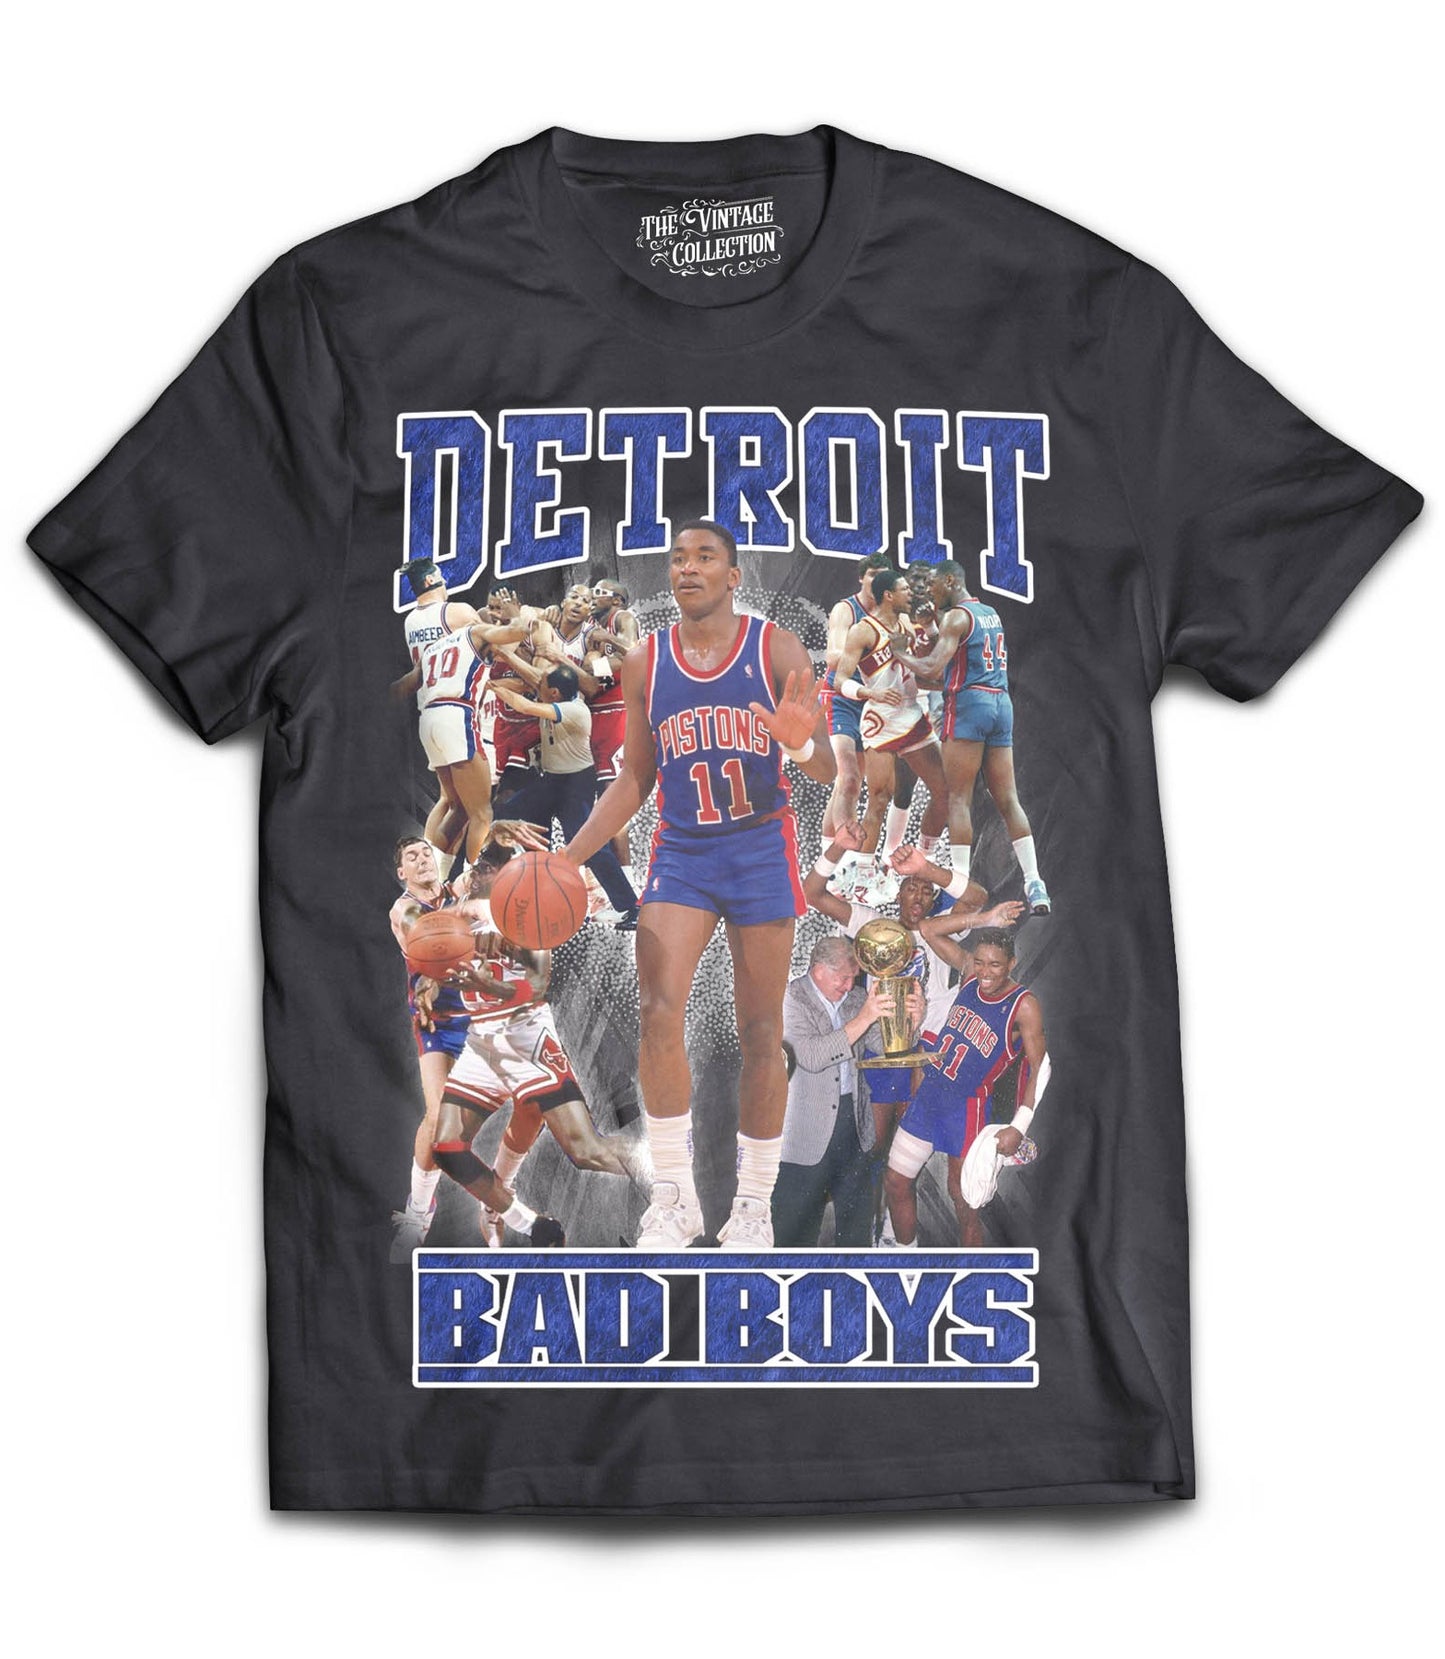 Detroit Bad Boys Tribute Shirt (Black)